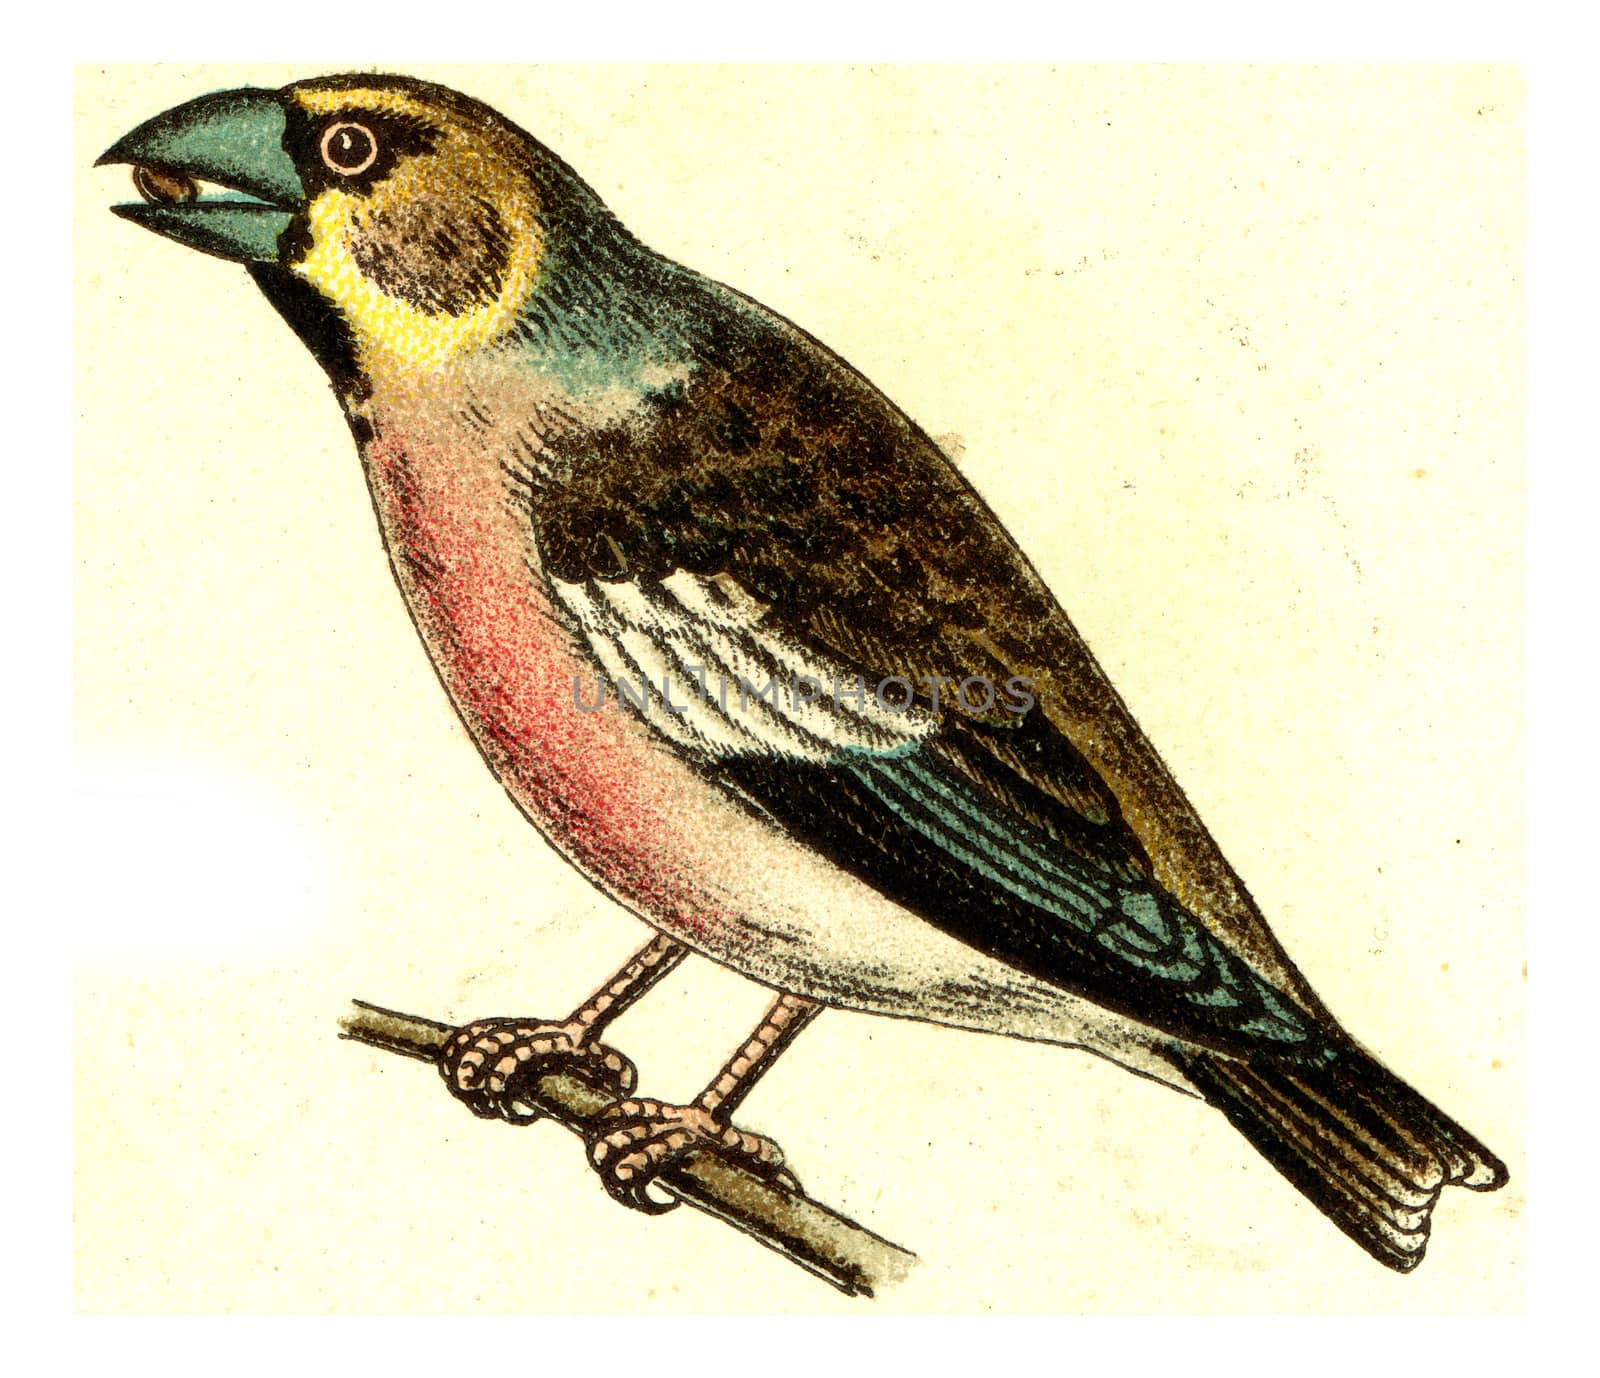 Grosbeak, vintage engraved illustration. From Deutch Birds of Europe Atlas.
